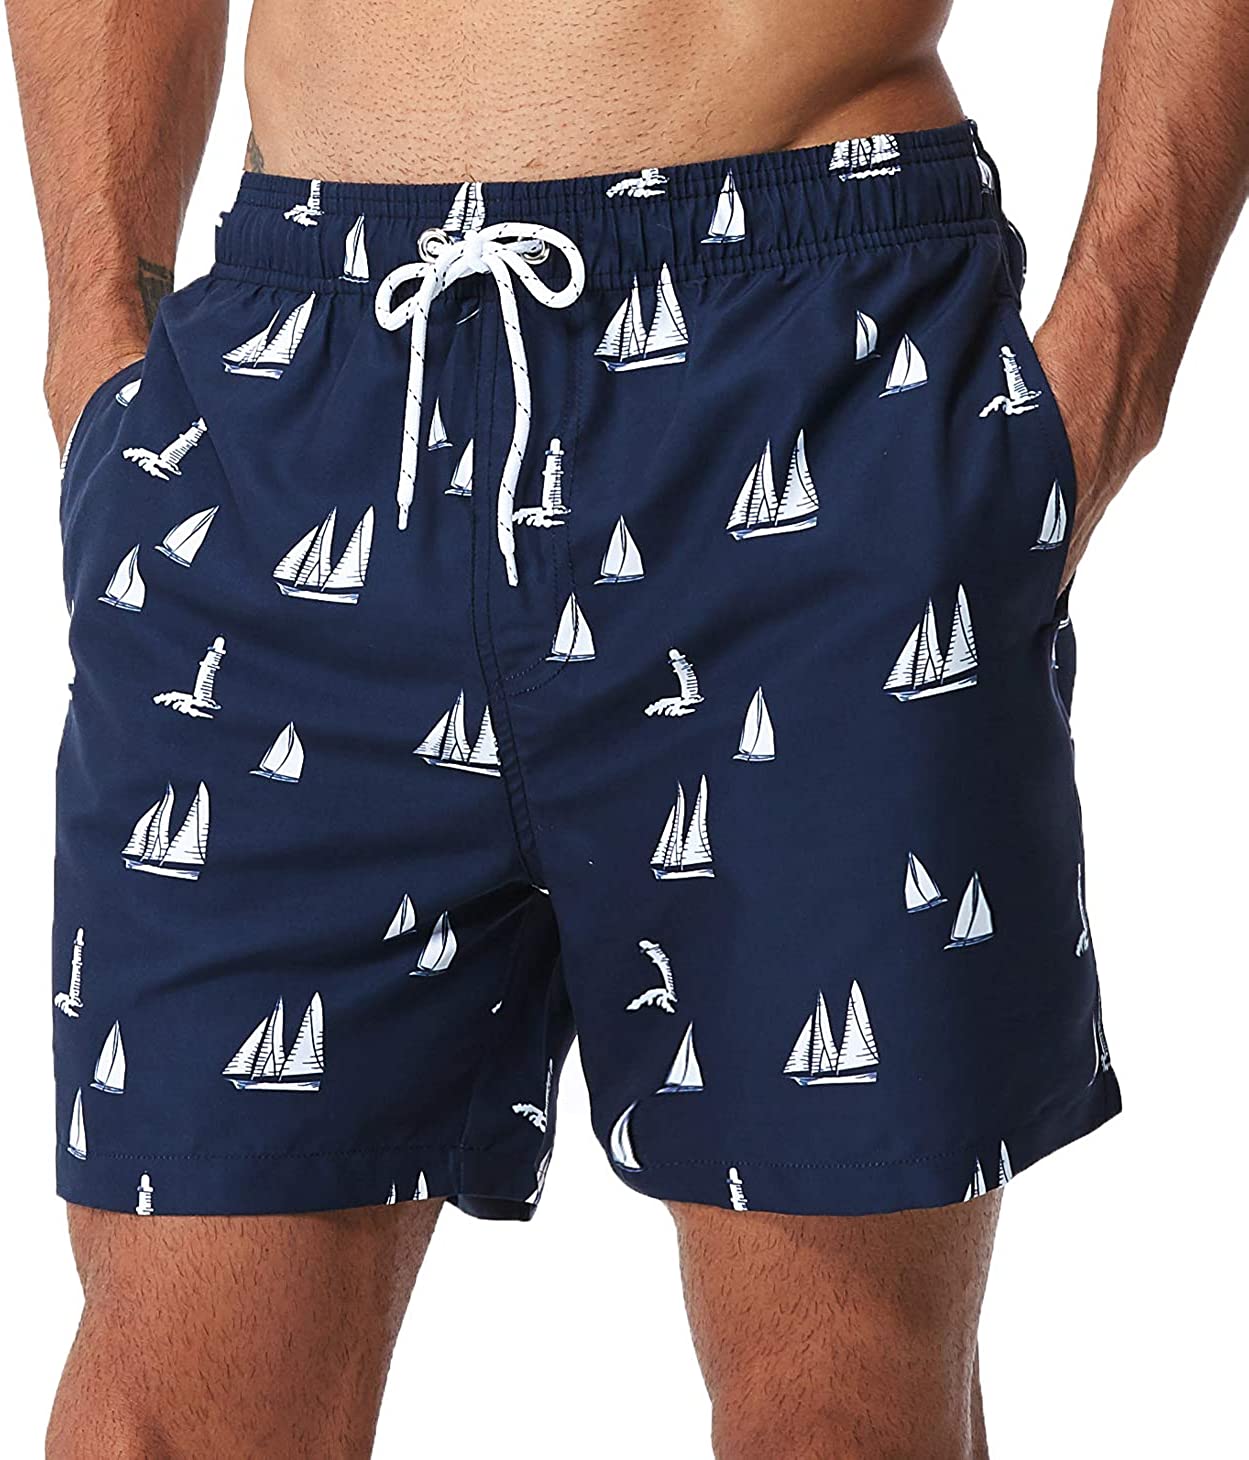 SILKWORLD Men's Swim Trunks Quick Dry Shorts, Printed_trunks: Sailing ...